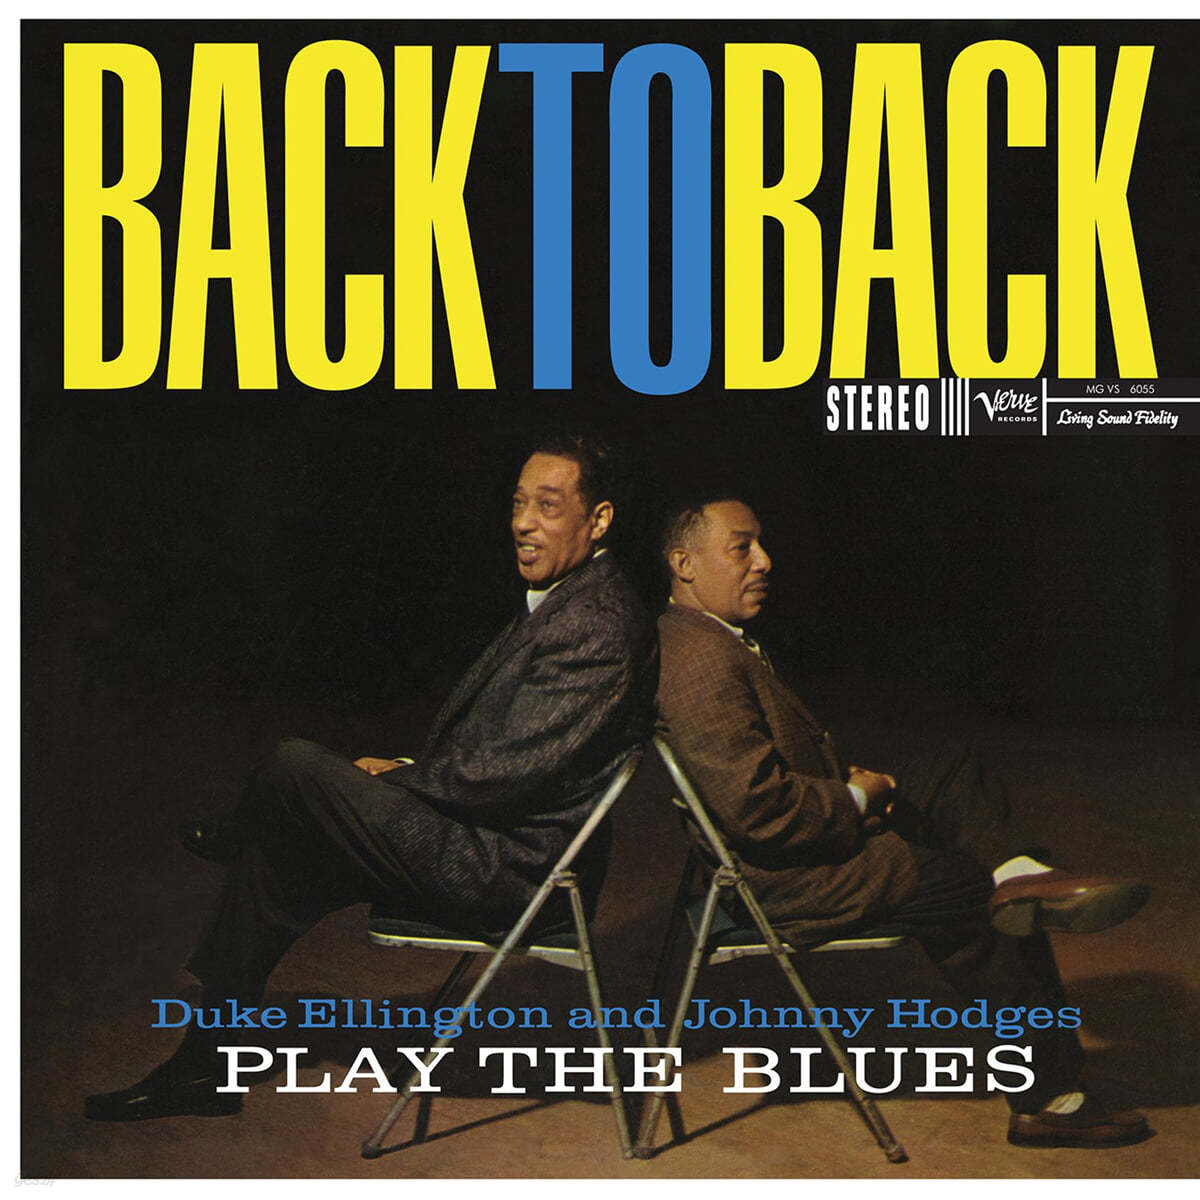 Duke Ellington / Johnny Hodges (듀크 엘링턴 / 조니 호지스) - Back To Back (Duke Ellington And Johnny Hodges Play The Blues) 